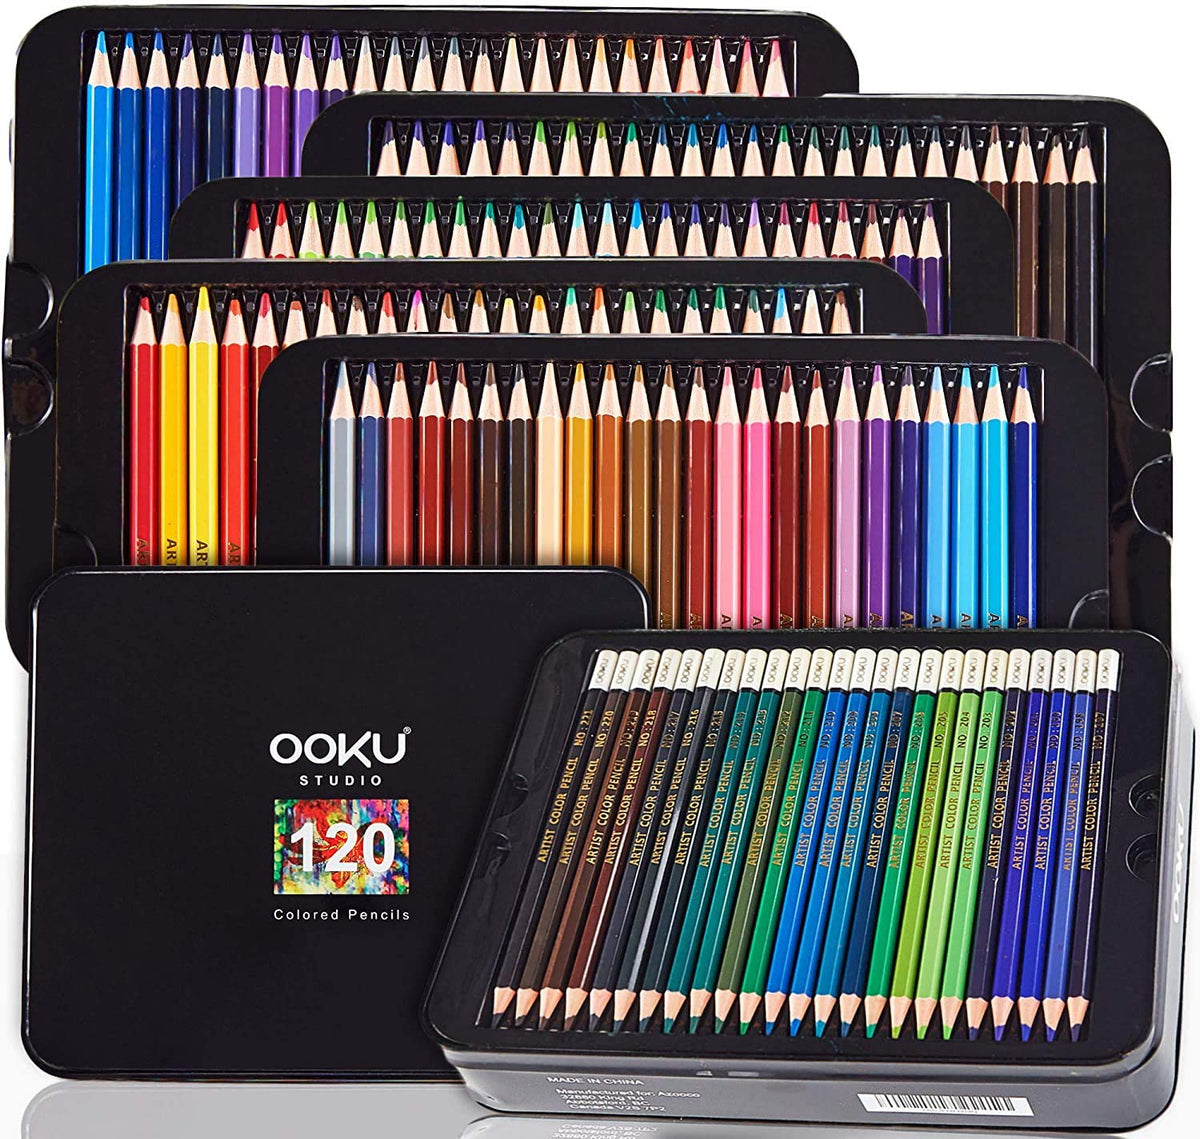 Arteza Professional Colored Pencils, High Pigment Assorted Colors